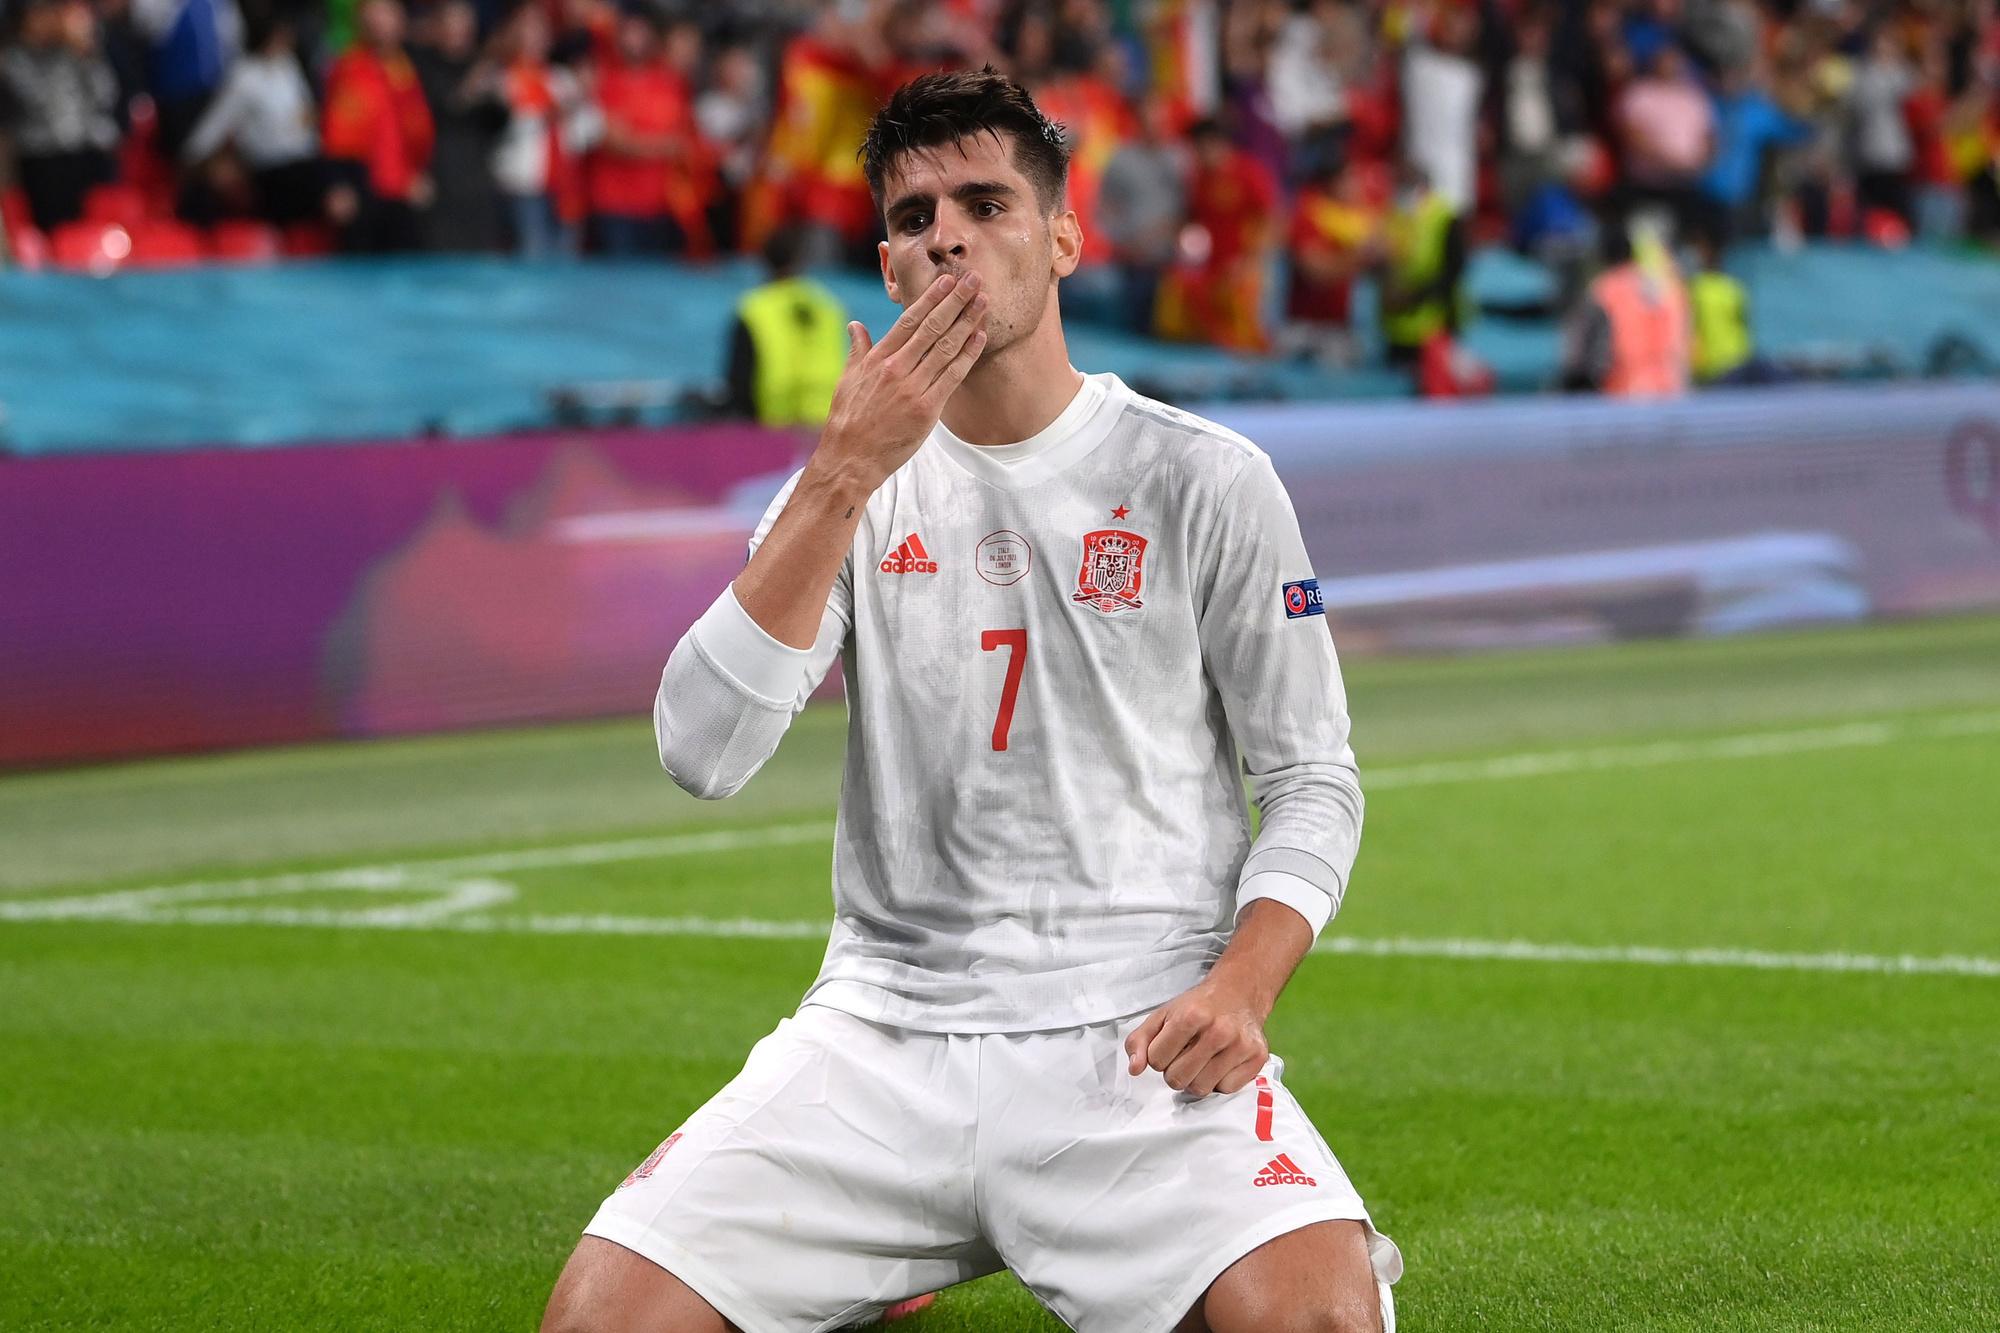 Alvaro Morata, invaller, doelpuntenmaker, miste later zijn penalty